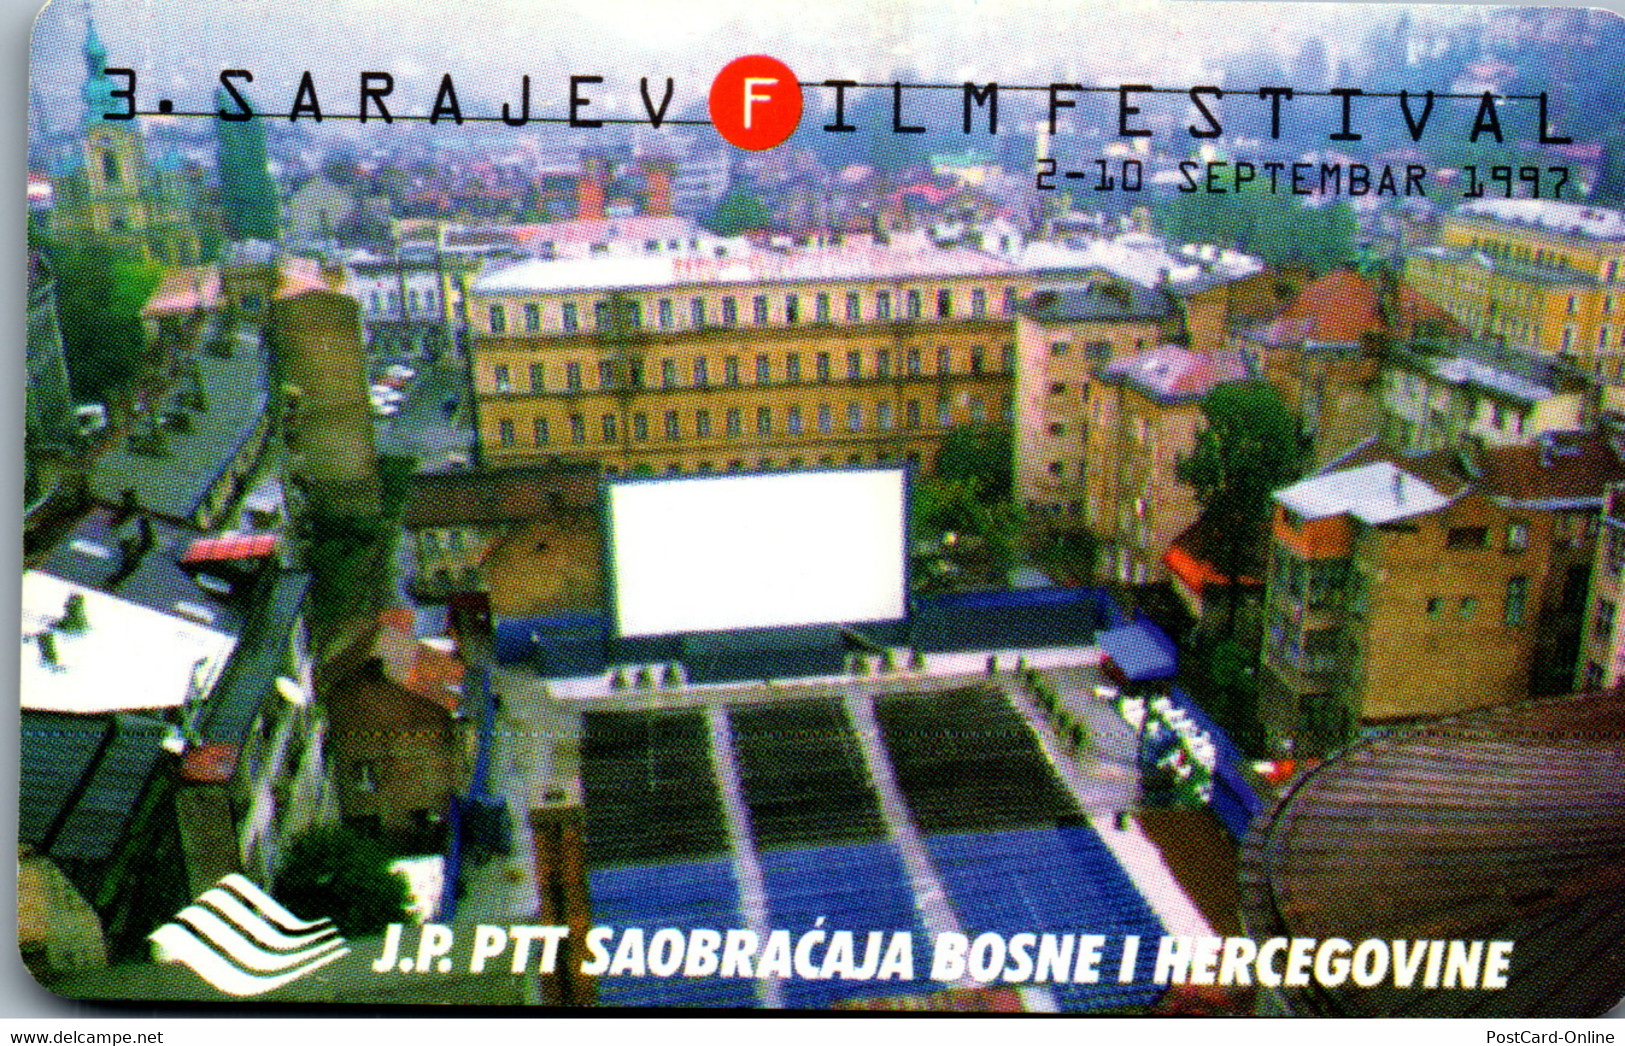 31762 - Bosnien Herzegovina - PTT , Sarajevo Filfestival 1997 - Bosnien